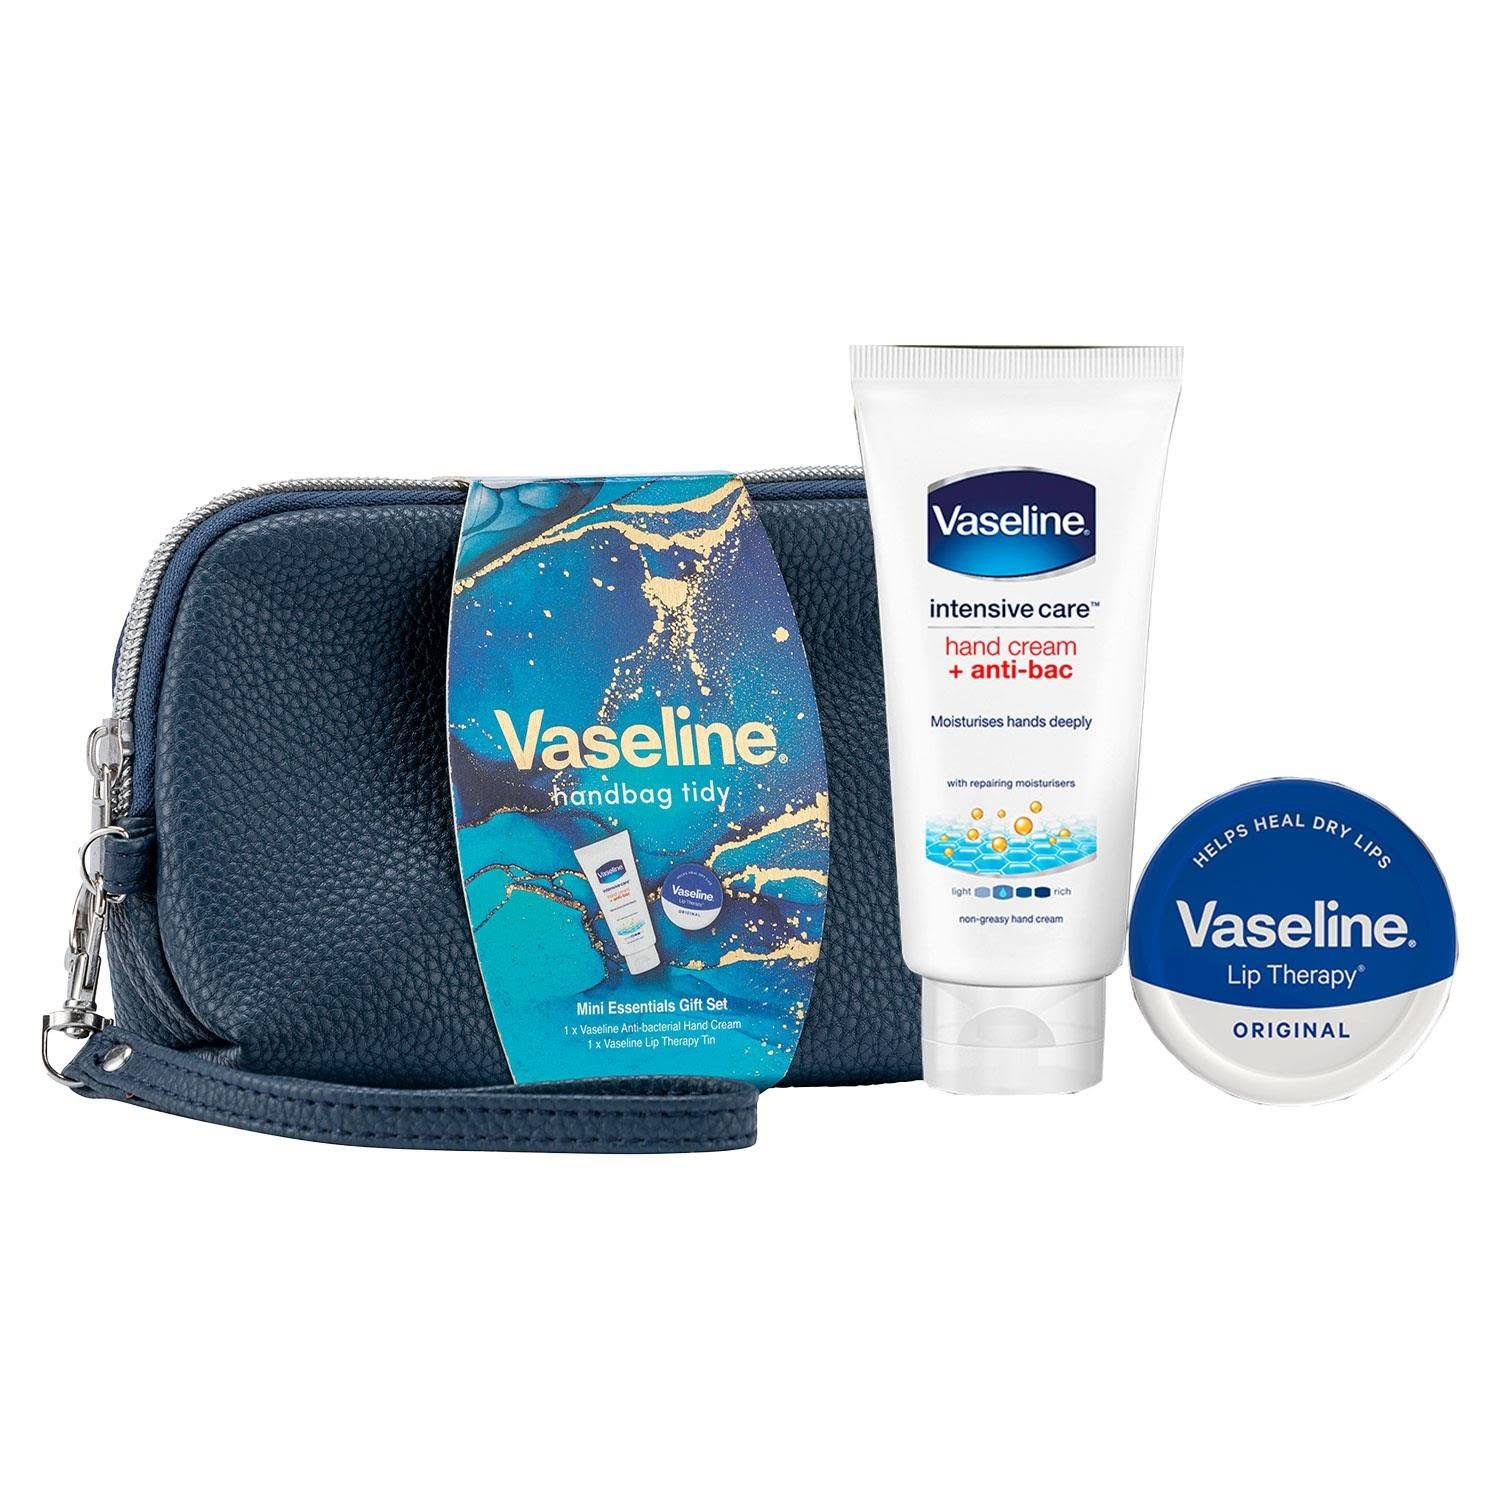 Vaseline Essentials Handbag Tidy Gift Set